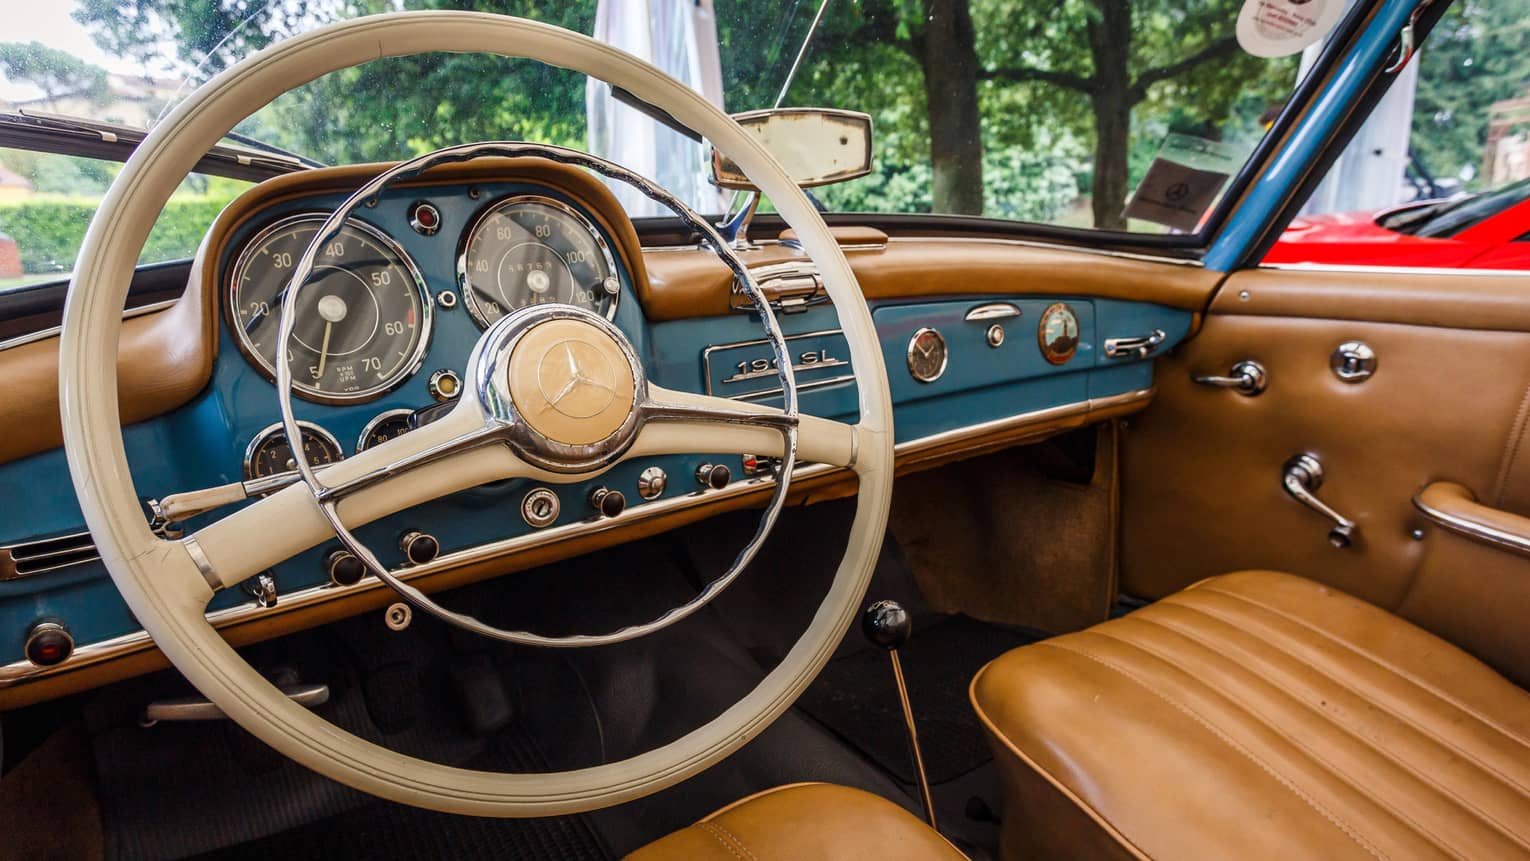 Wheel, dashboard, leather seats of classic luxury car